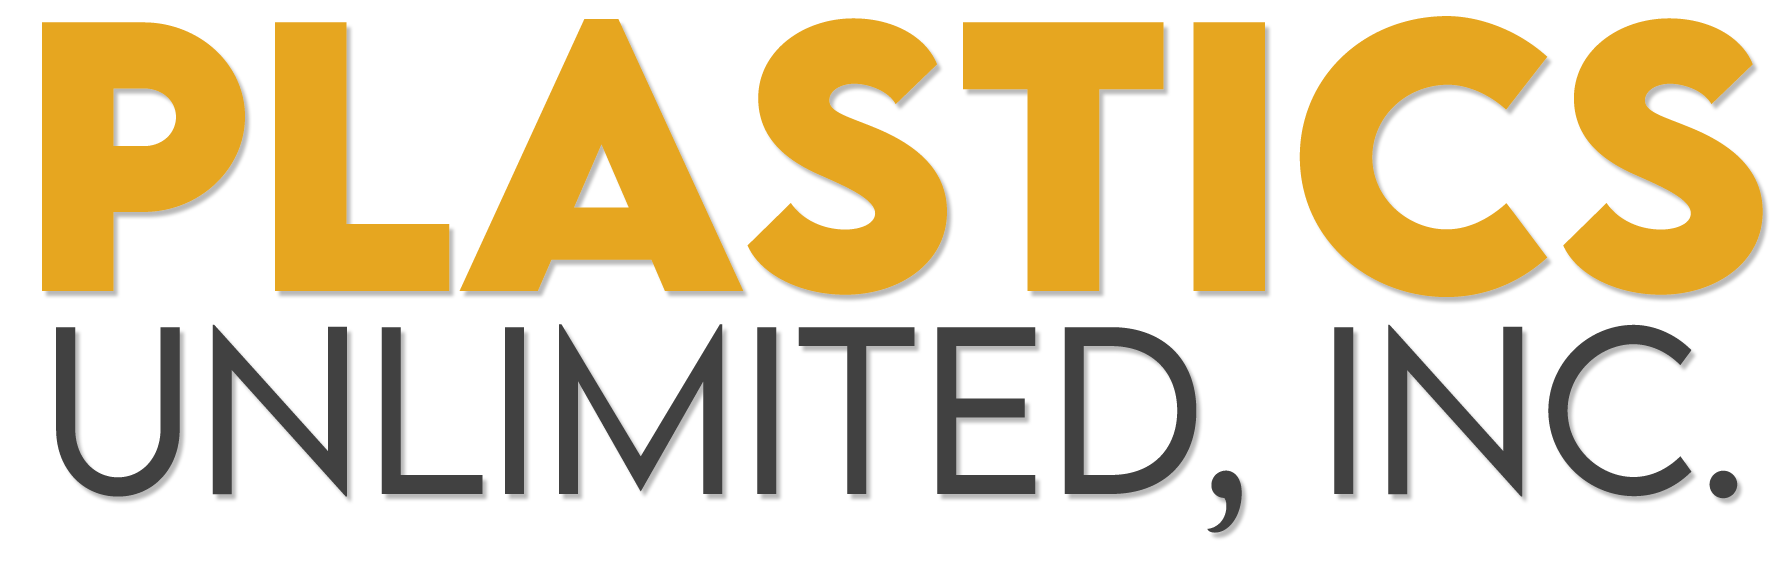 Plastics Unlimited, Inc logo